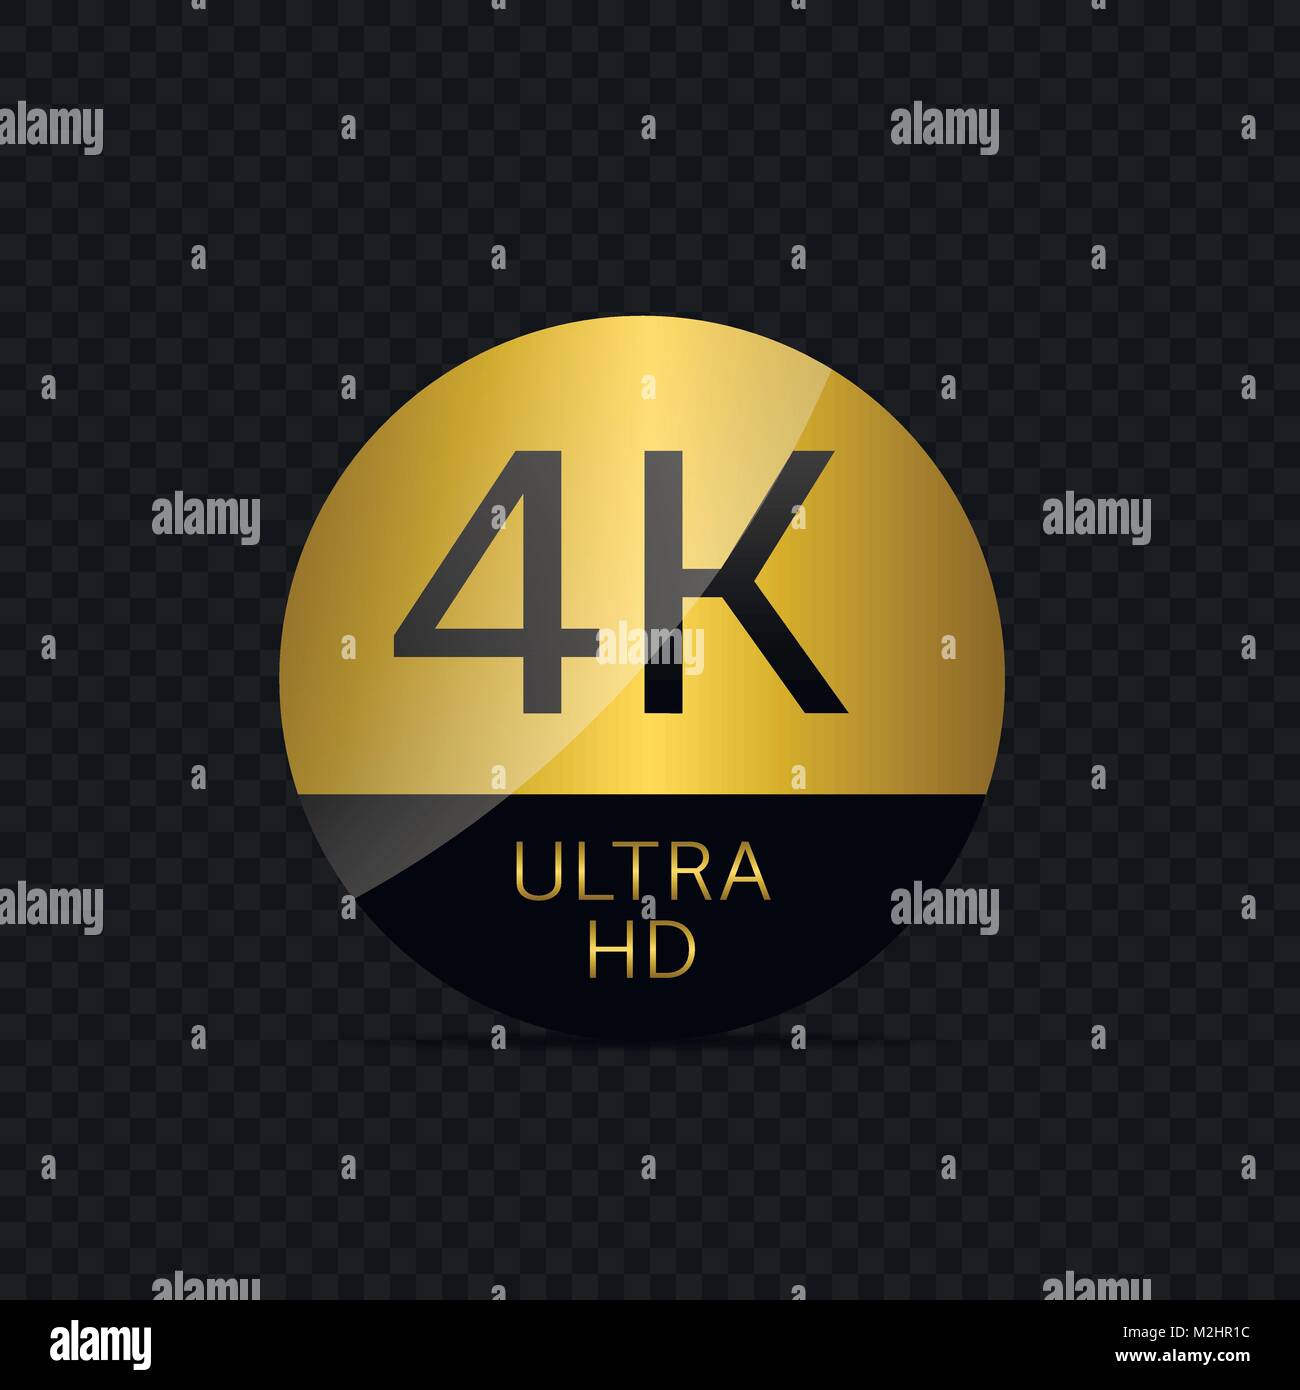 4 K Ultra HD Stock Vector